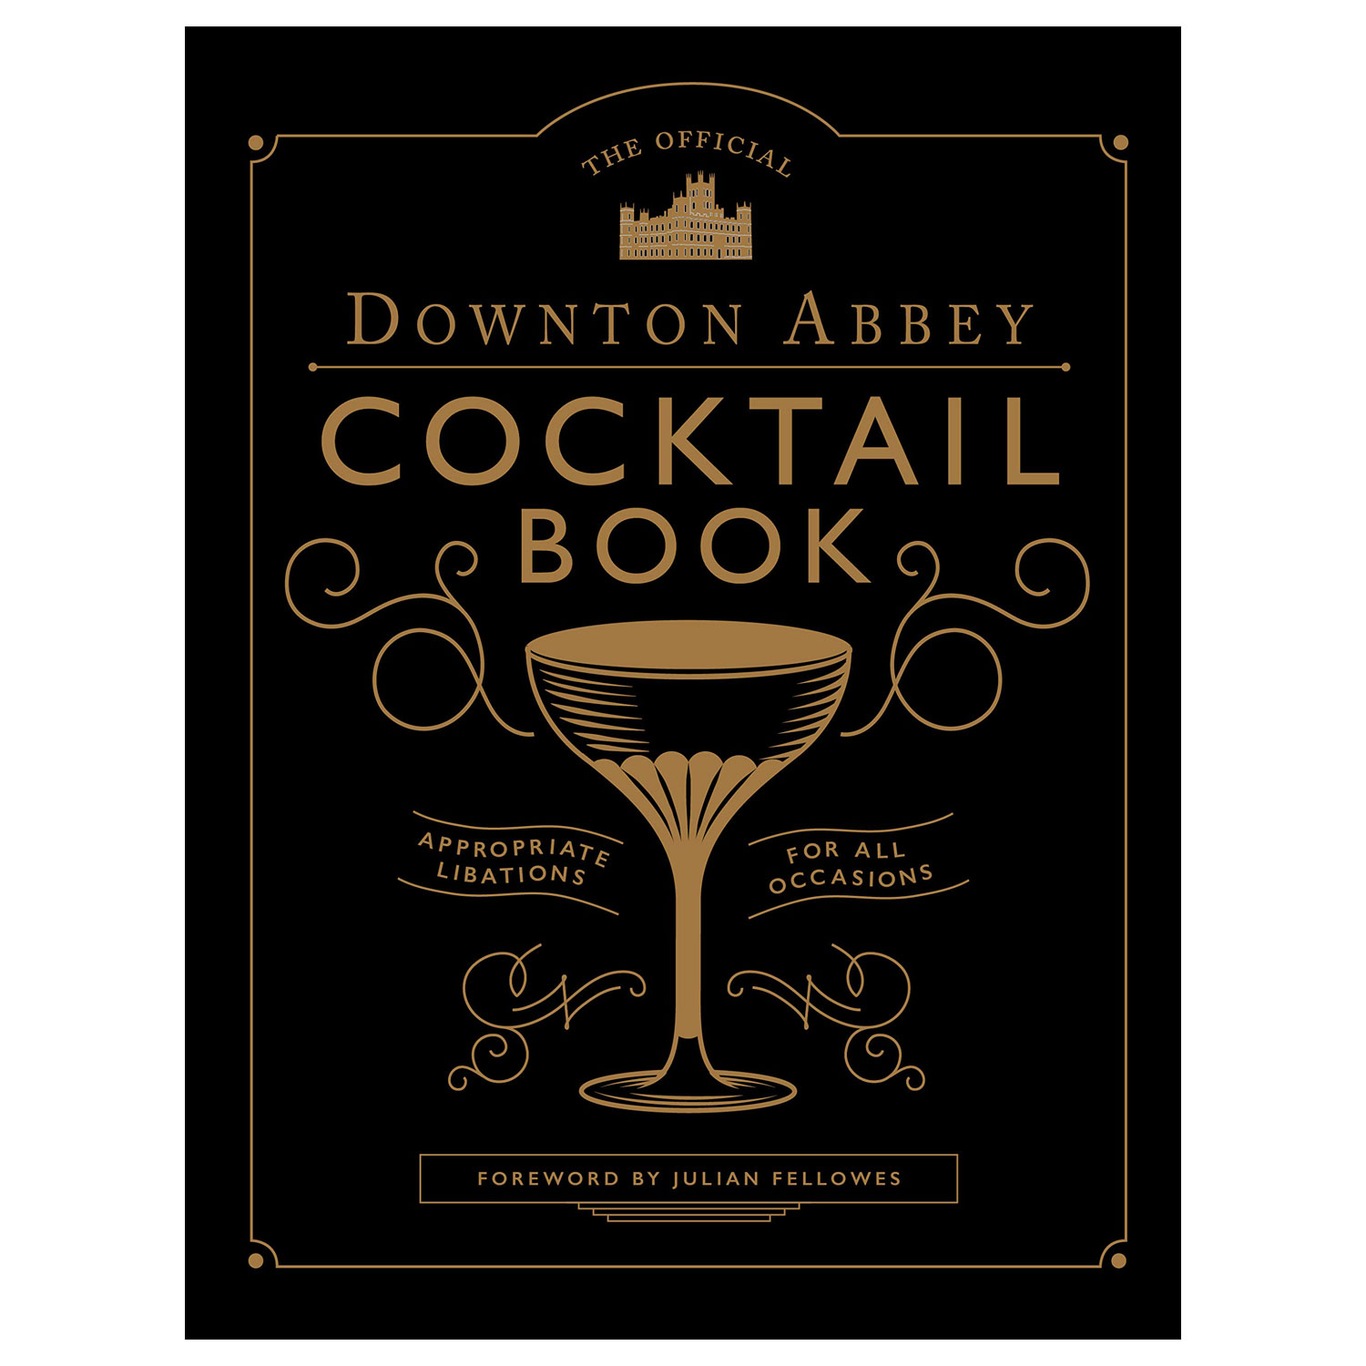 Downtown Abbey Cocktail Bog